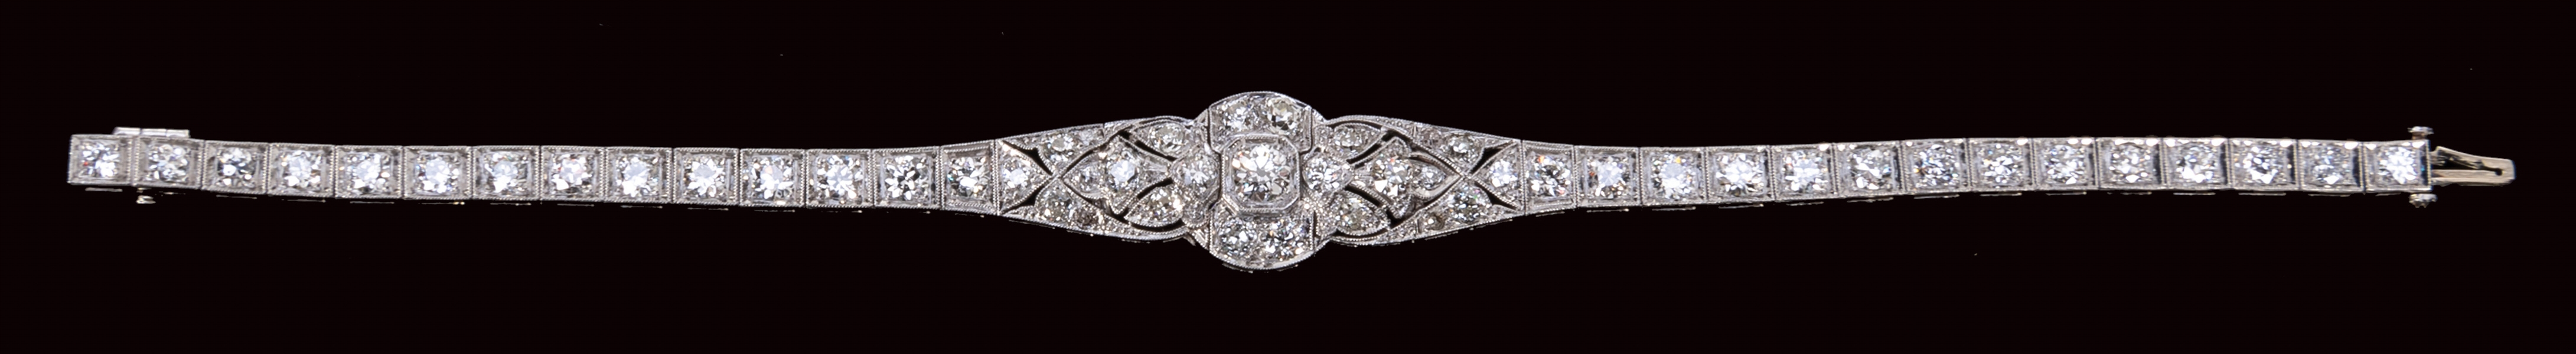  [HOUDINI FAMILY] Houdini-Gifted Art Deco Diamond Bracelet. ...